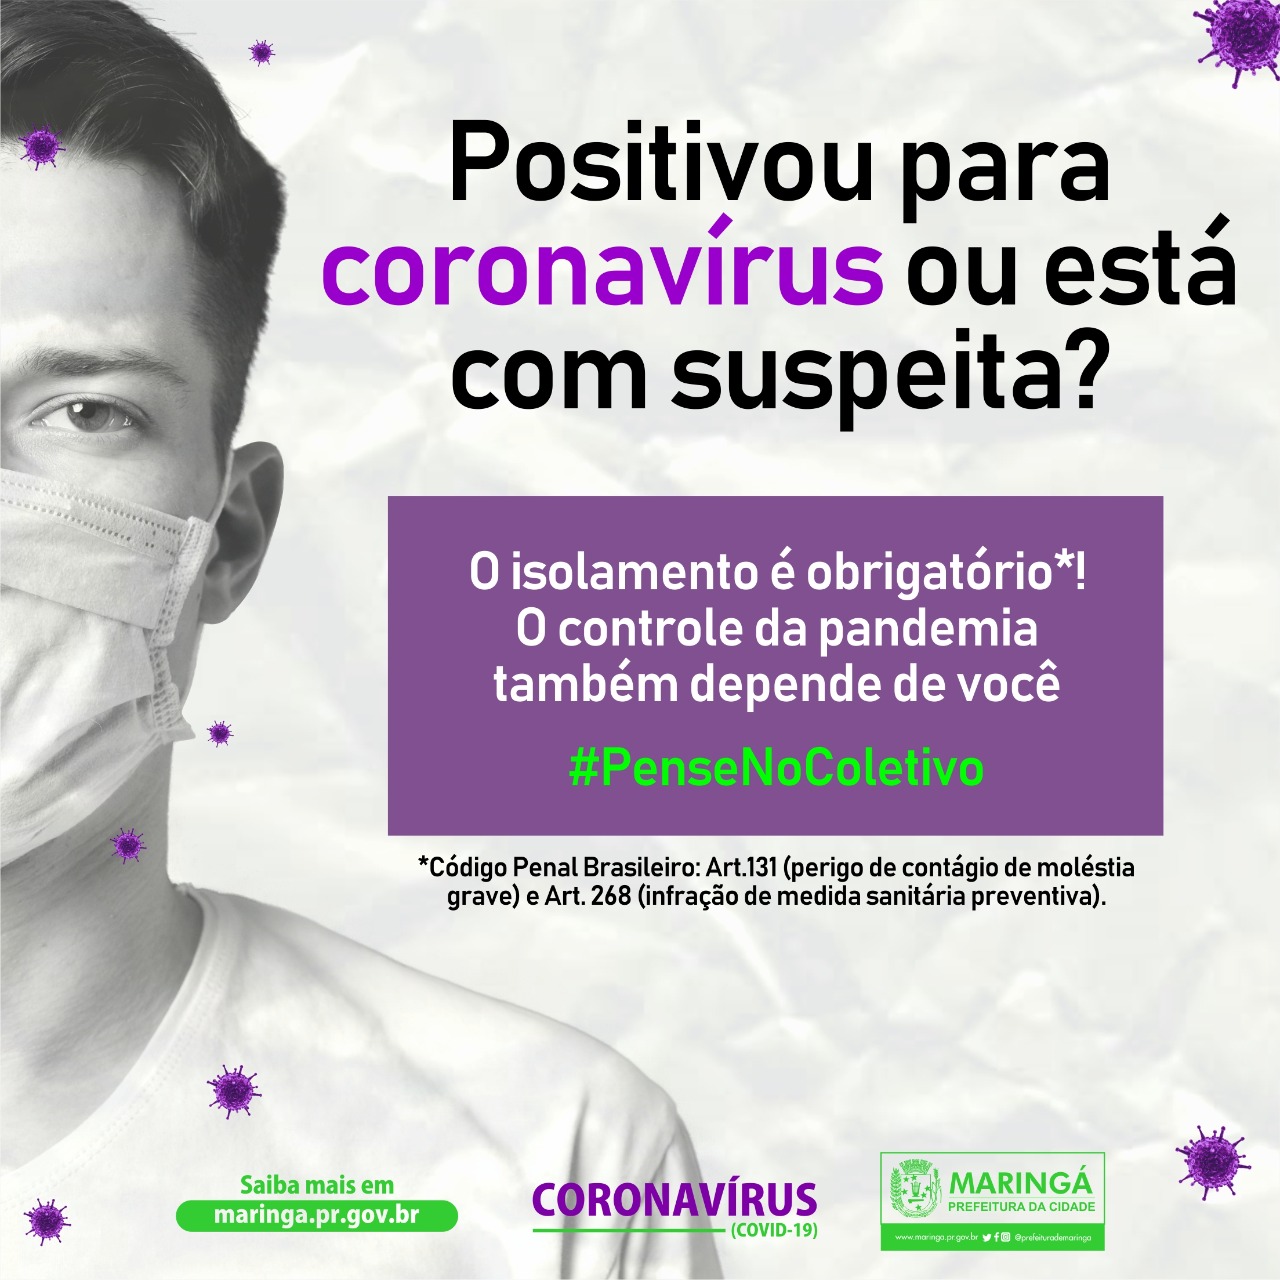 A Prefeitura de Maringá alerta: positivou para coronavírus ou está com suspeita?